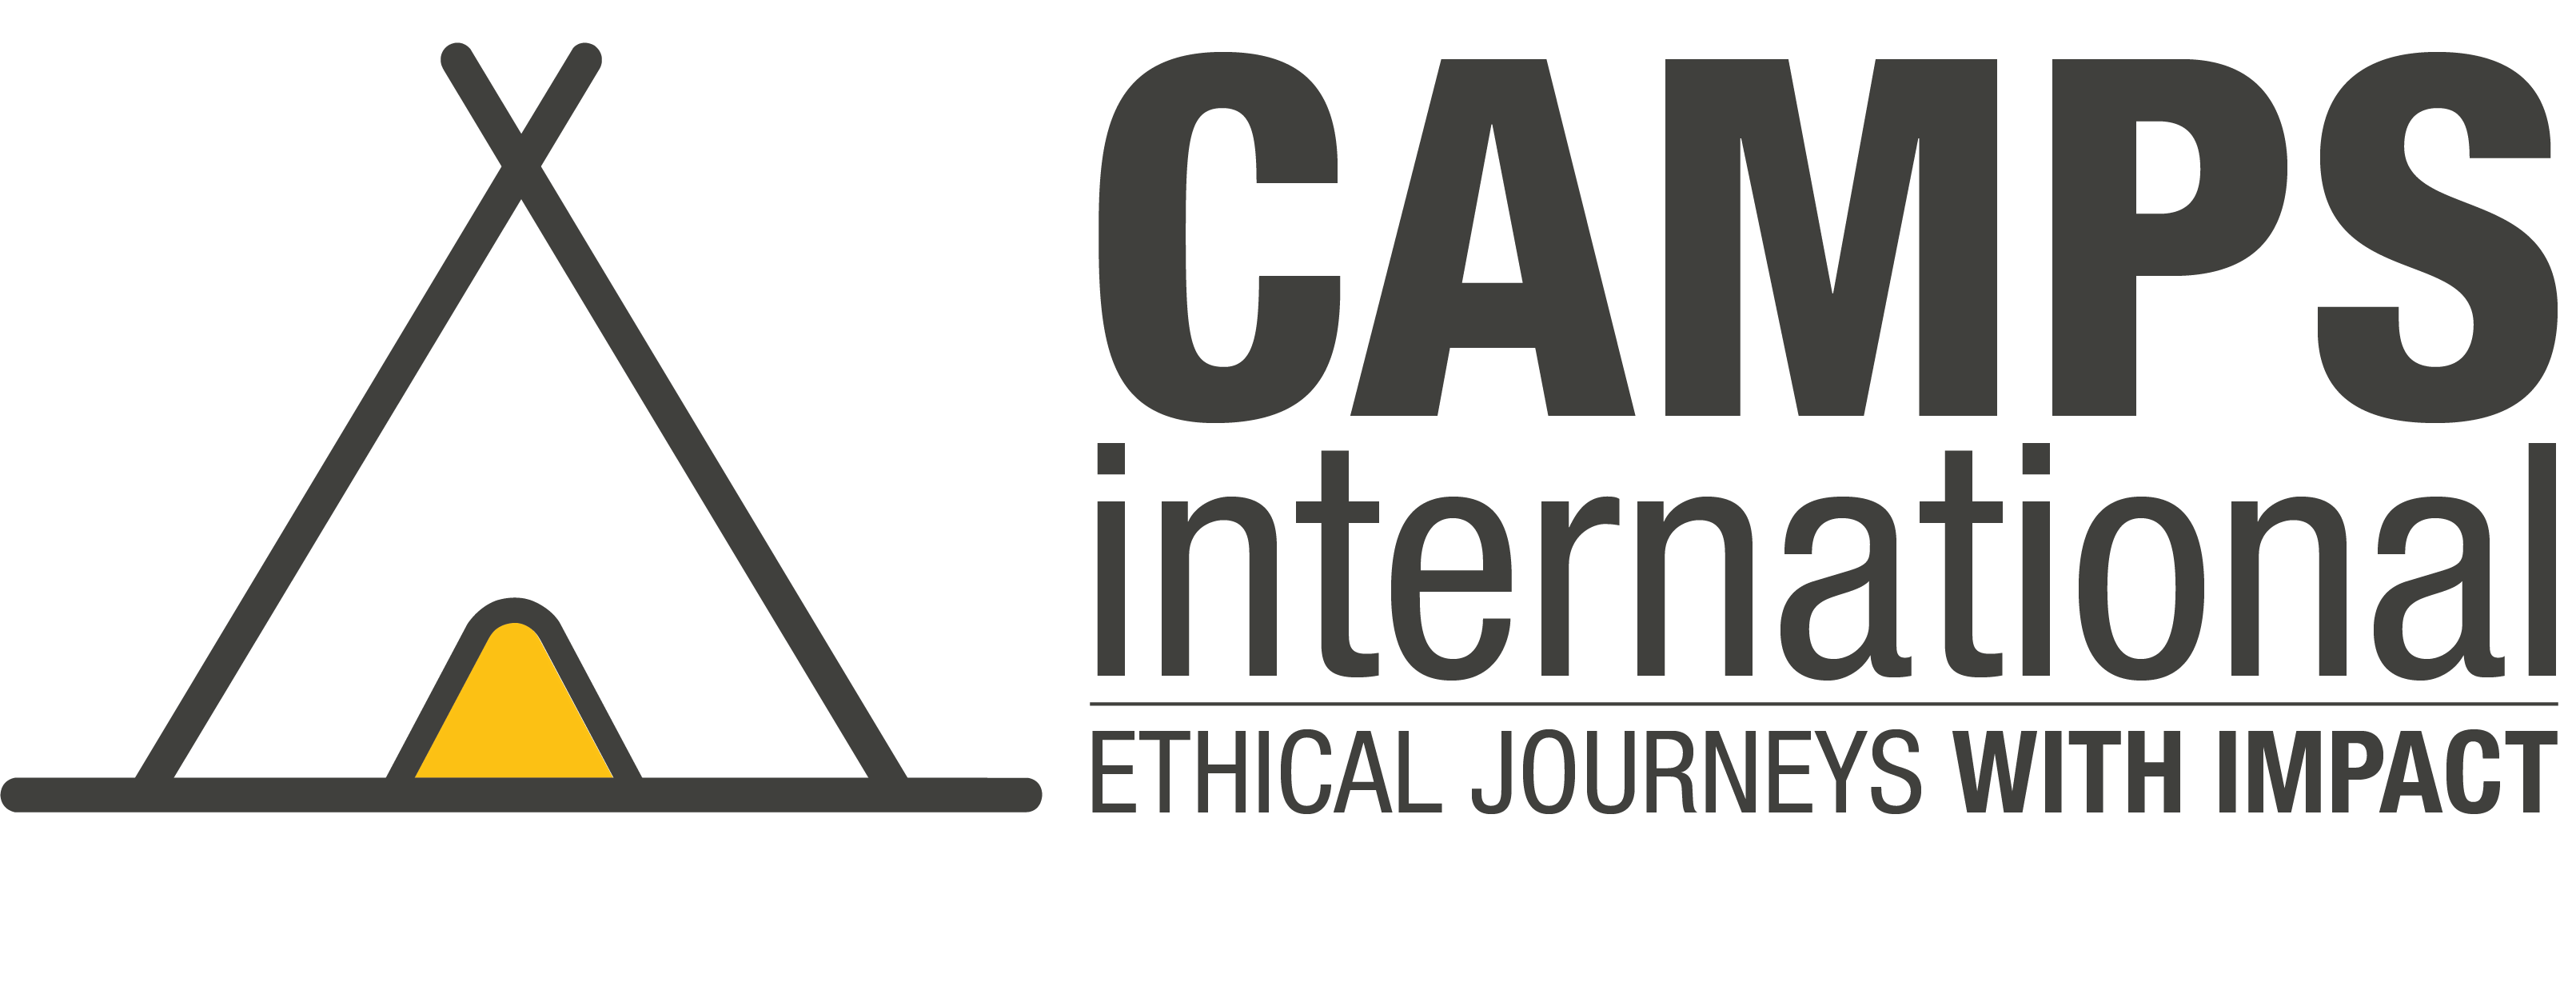 Camps International logo